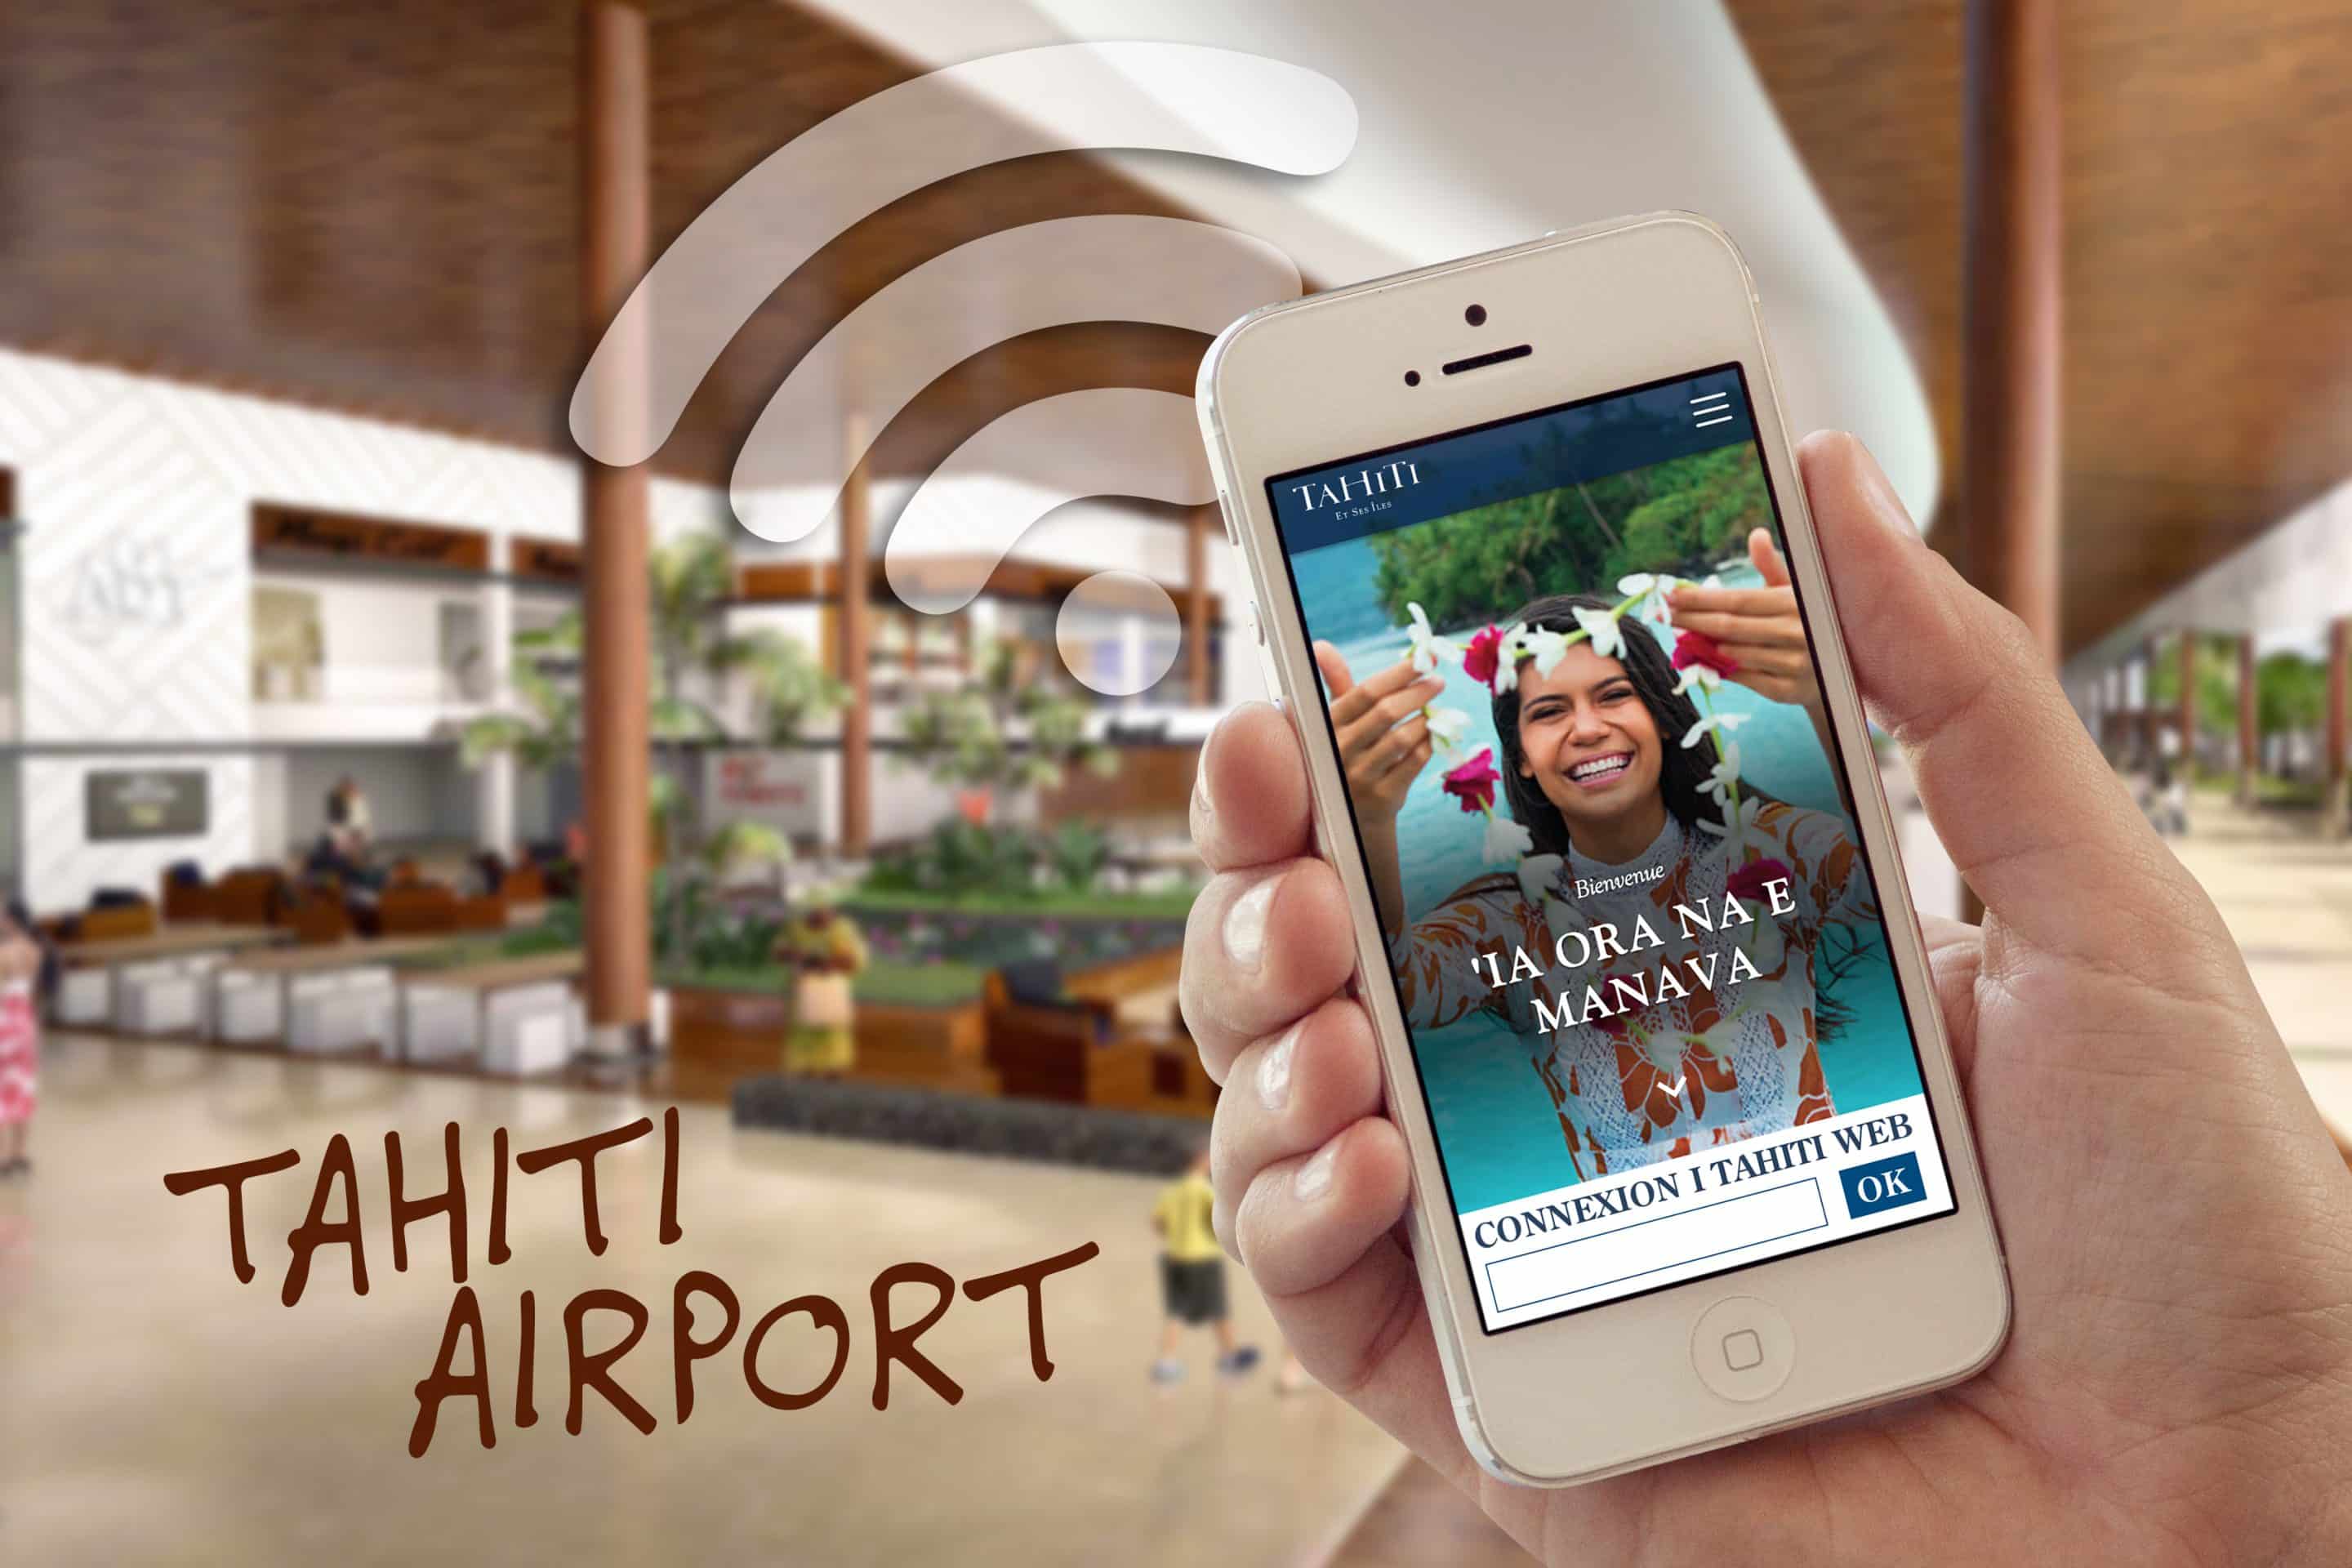 I-phone-aeroport